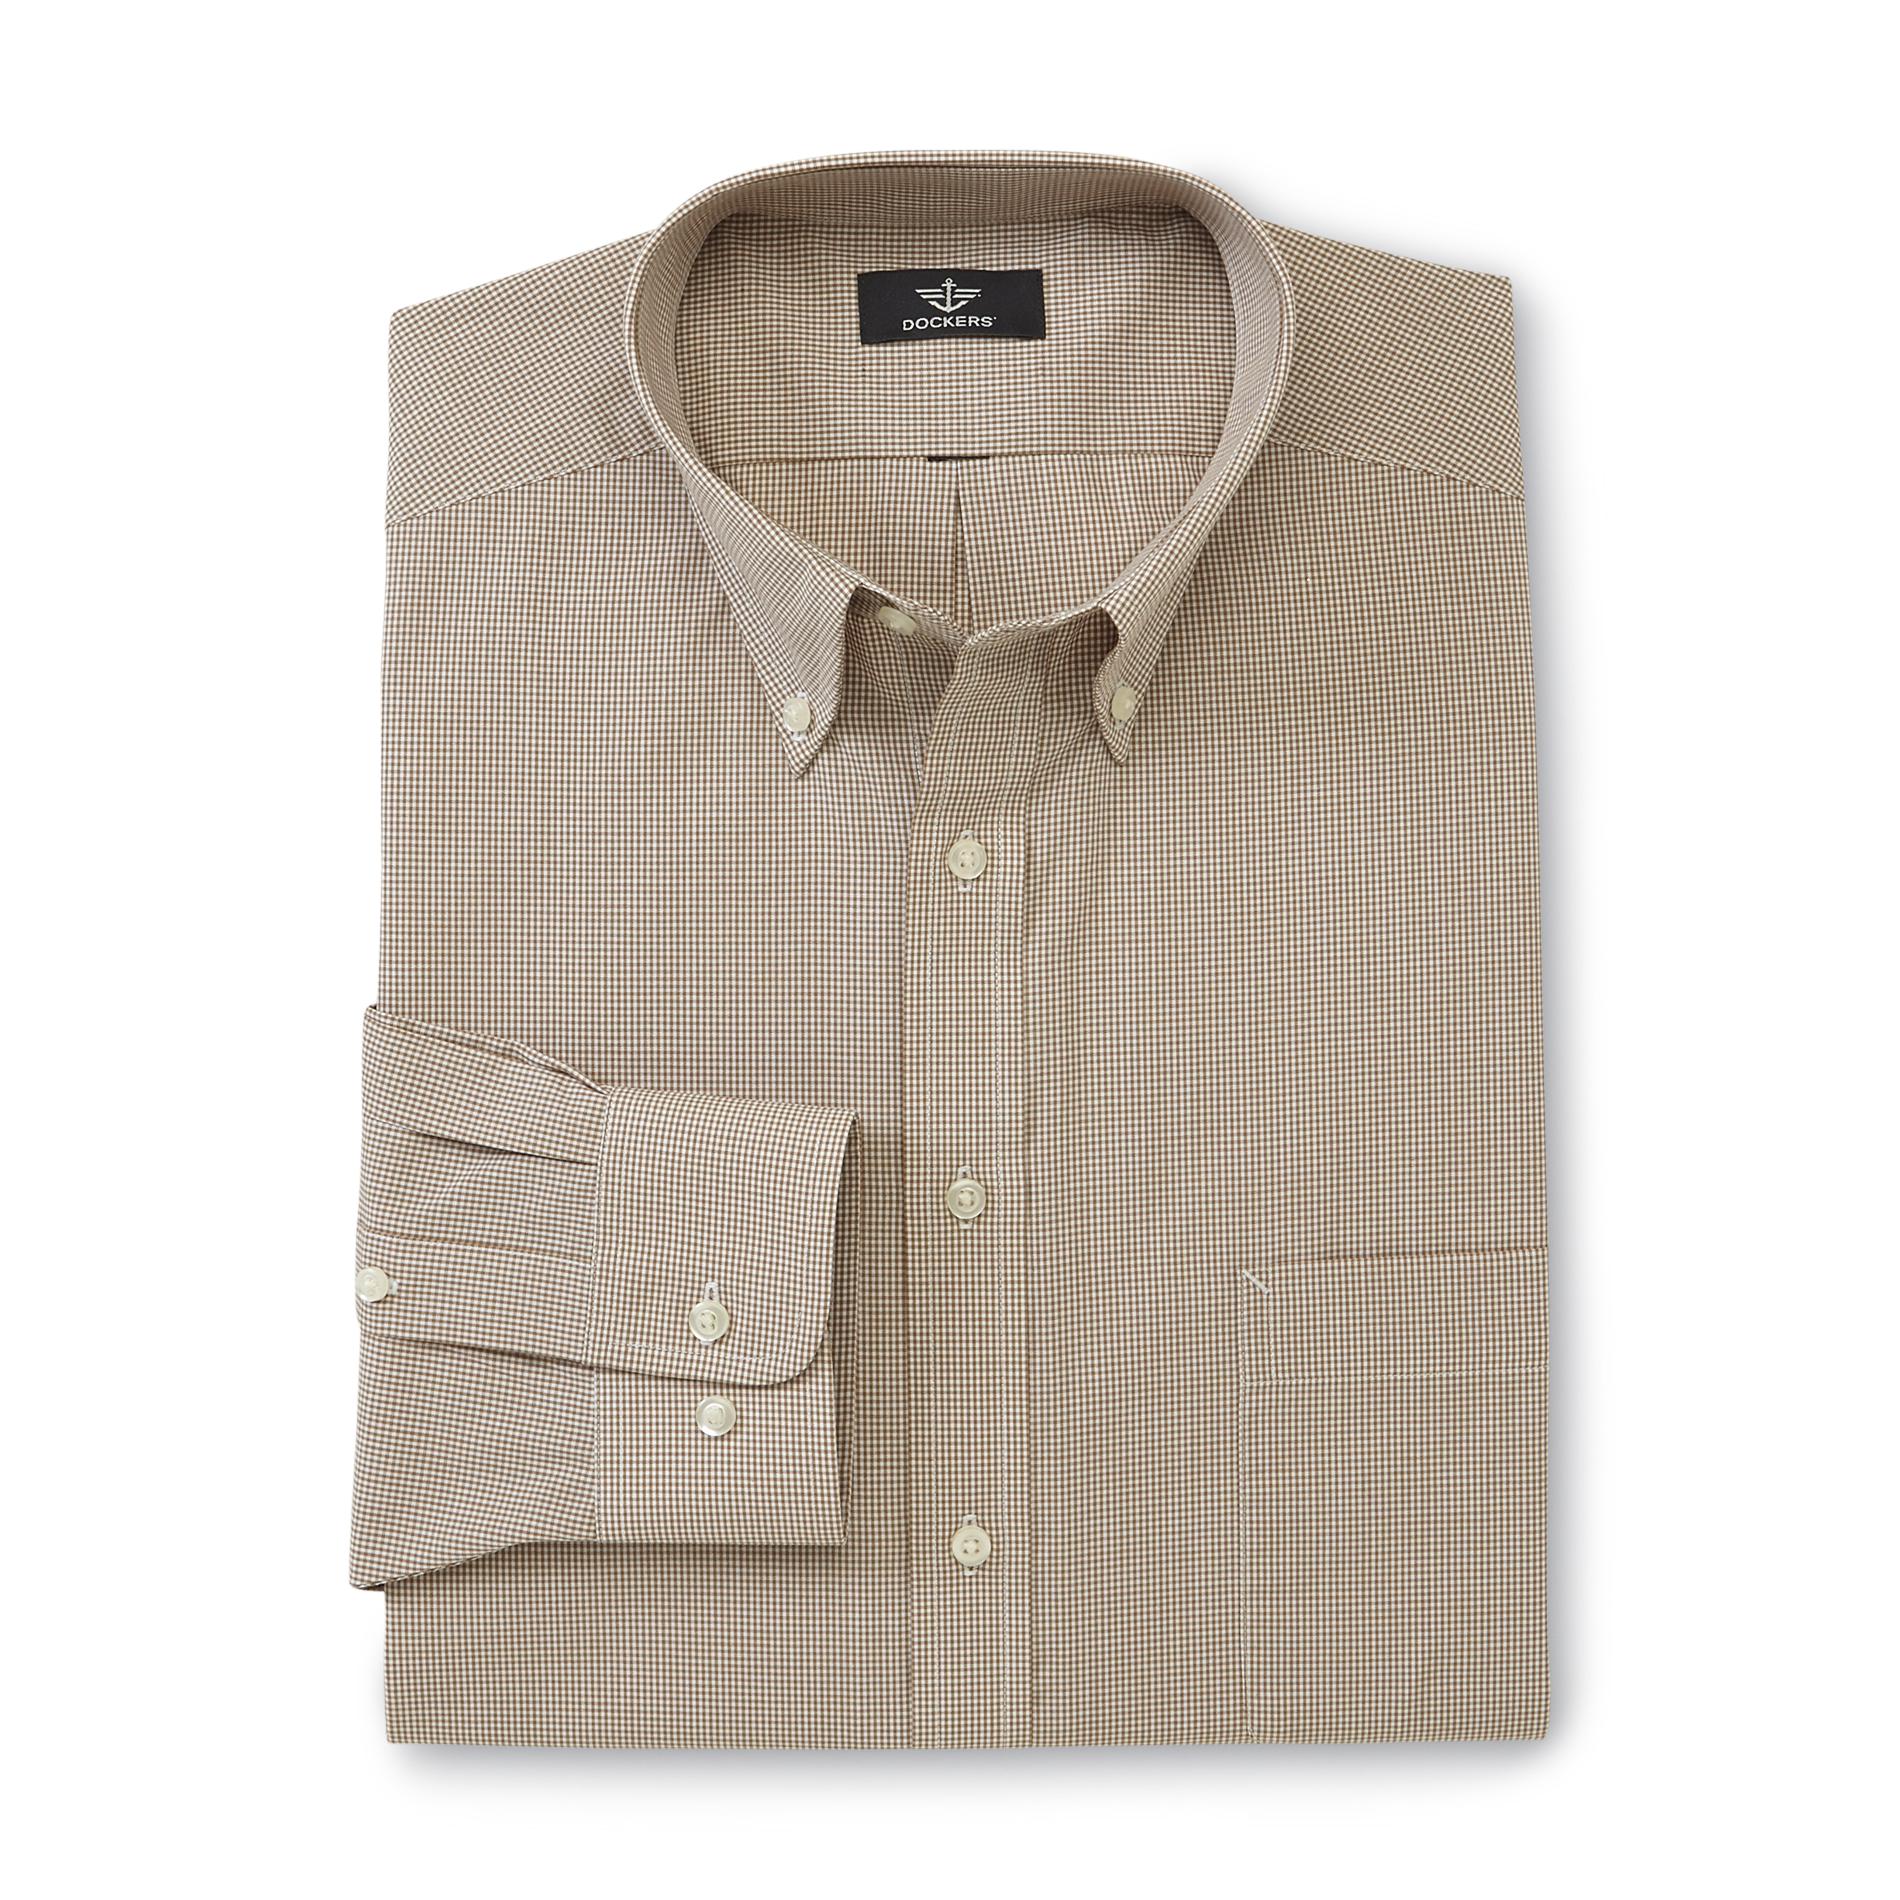 Dockers Men's Casual Fit Dress Shirt - Gingham